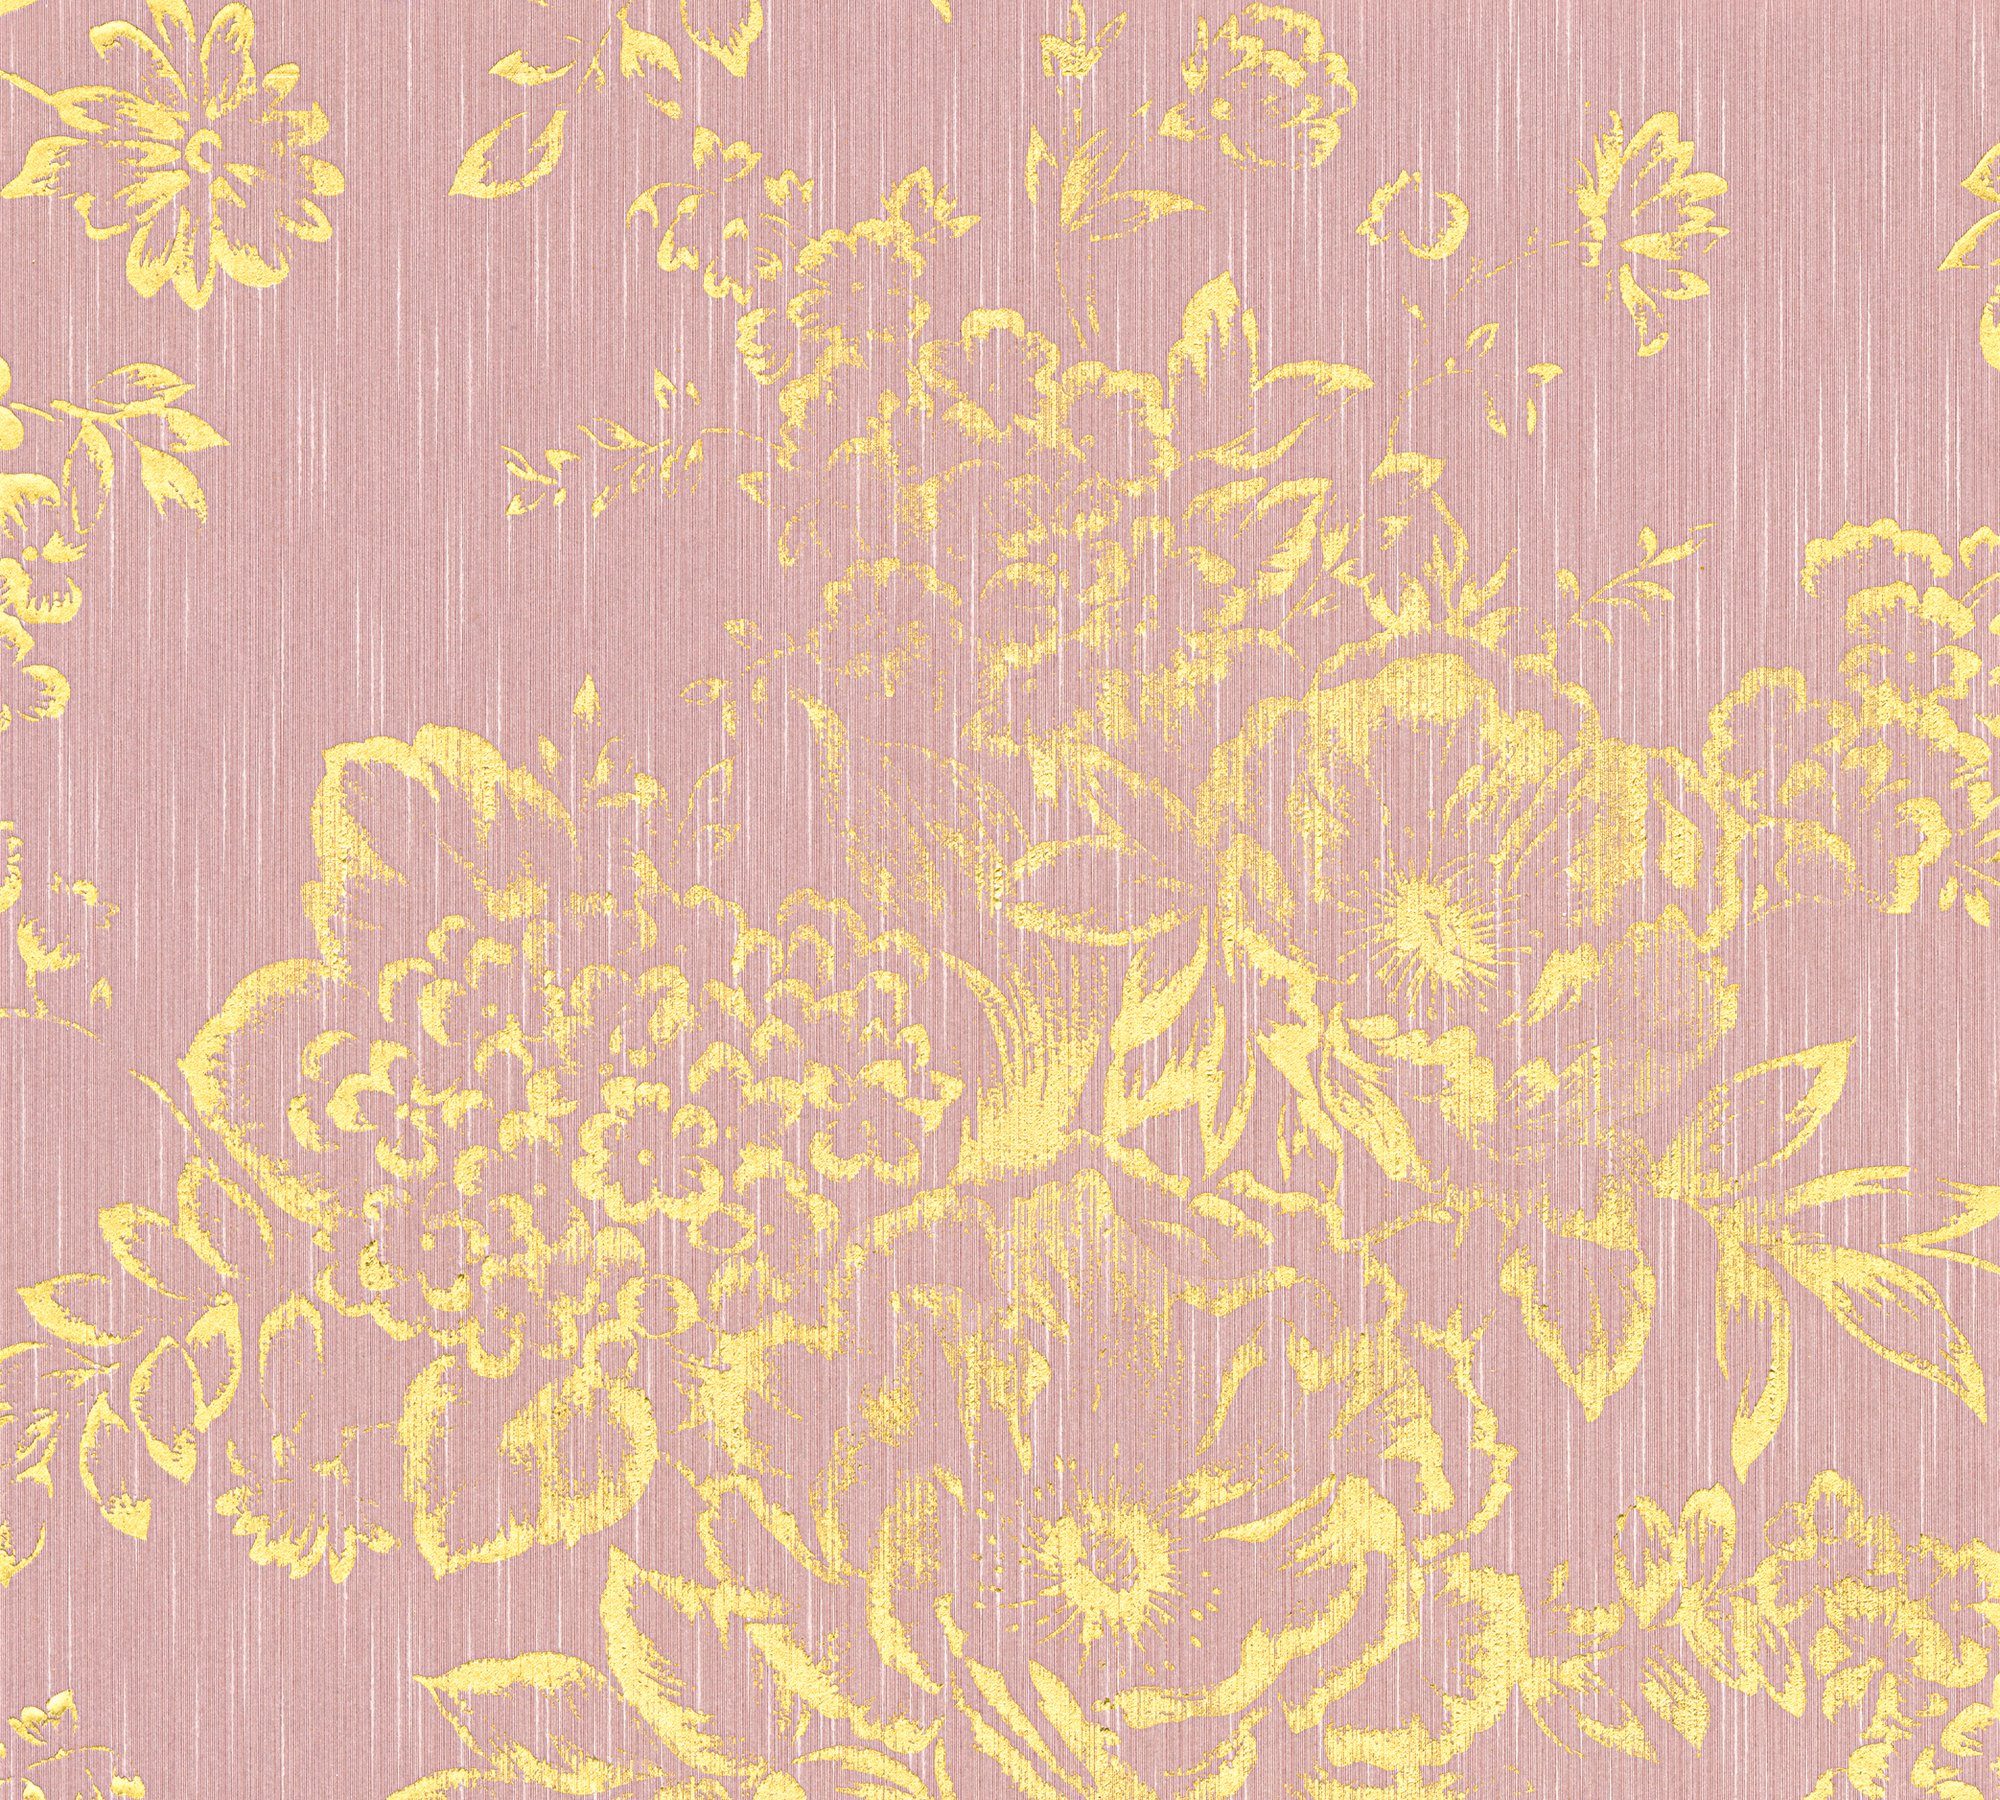 Tapete Paper floral, Silk, gold/rosa Textiltapete Barocktapete glänzend, Architects matt, Création Blumen Metallic A.S. samtig,